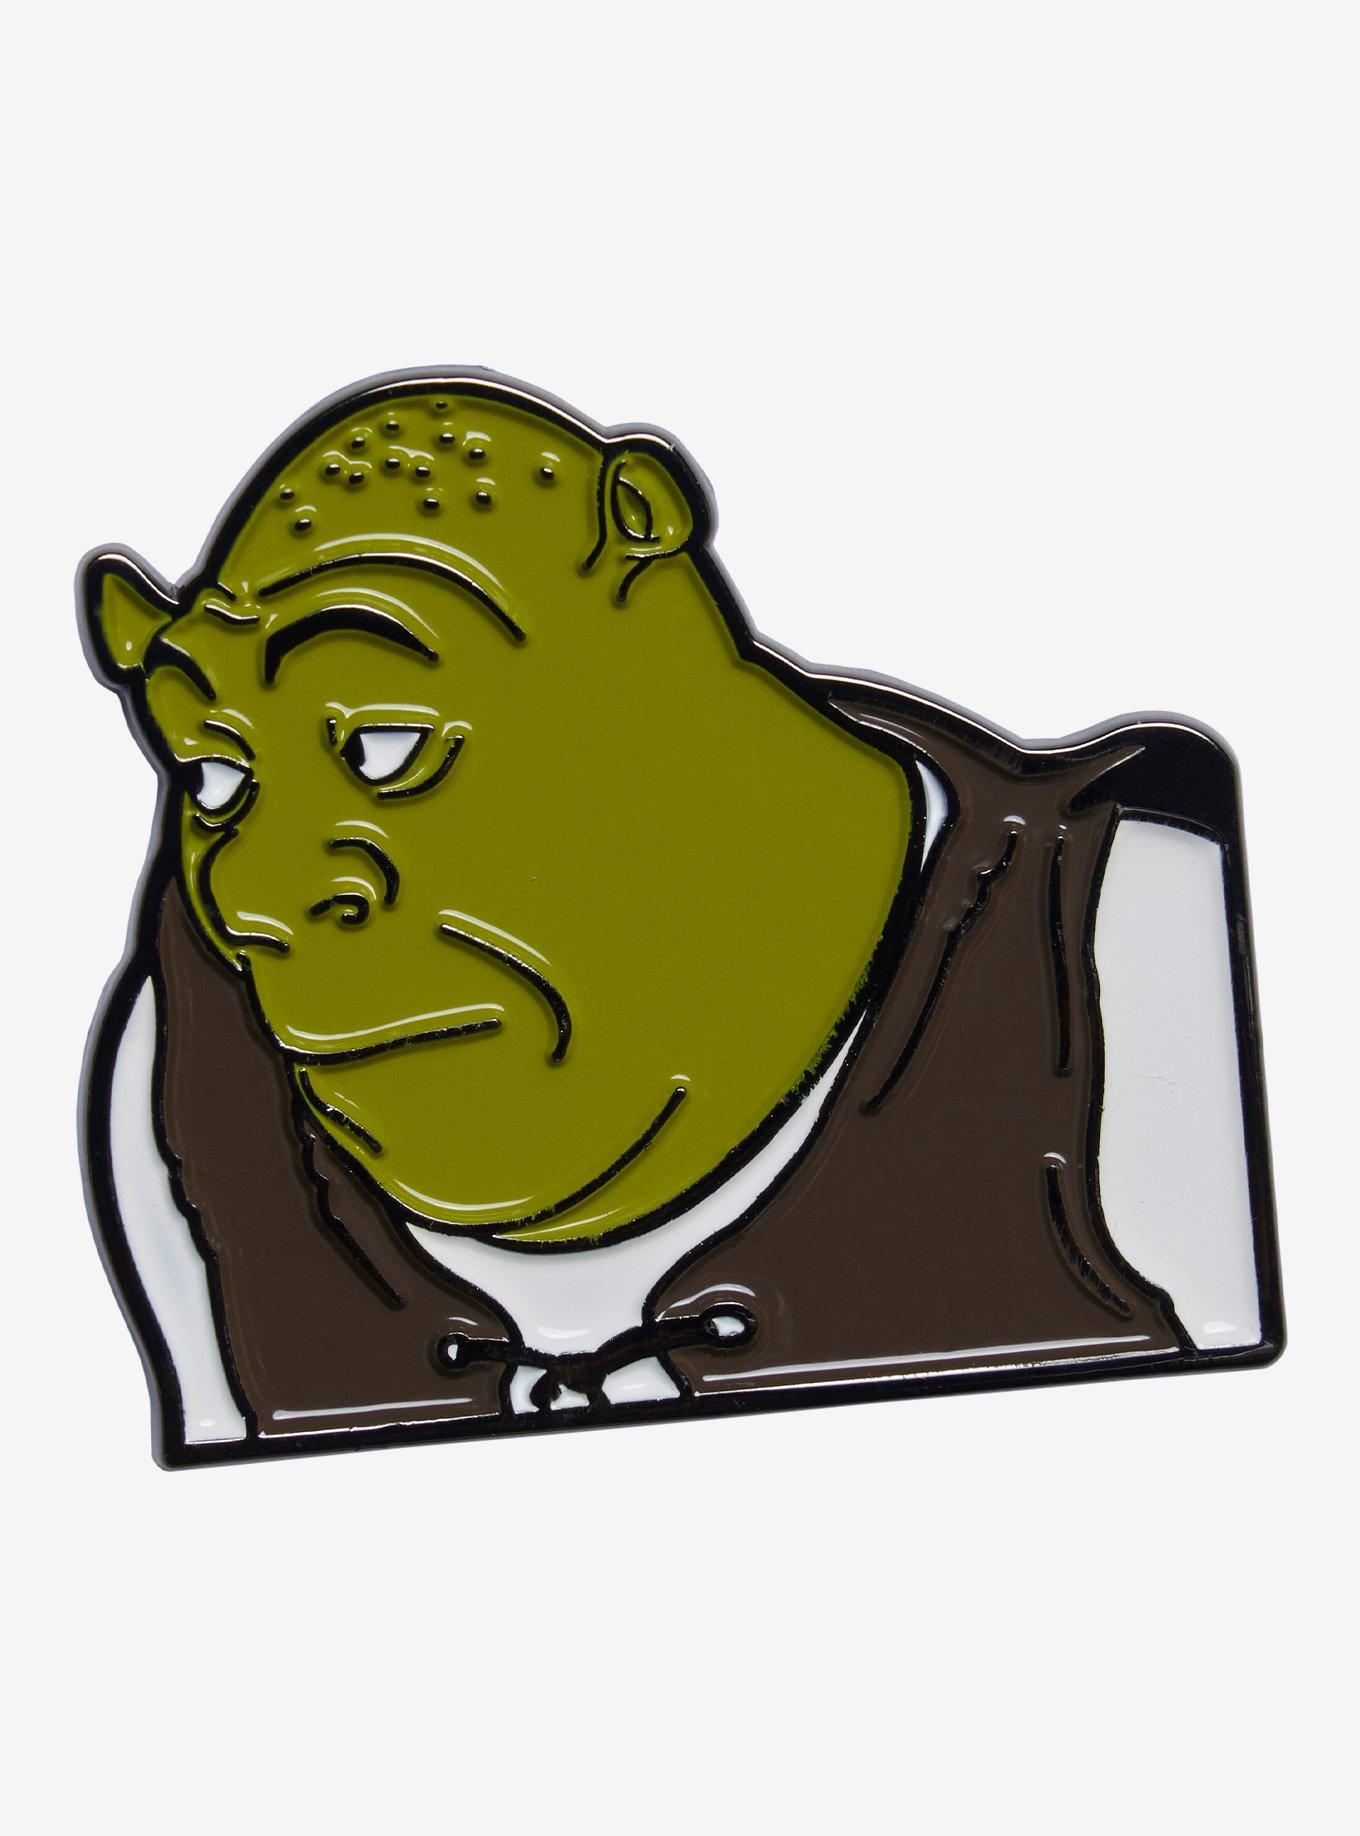 Shrek Face Meme | Postcard